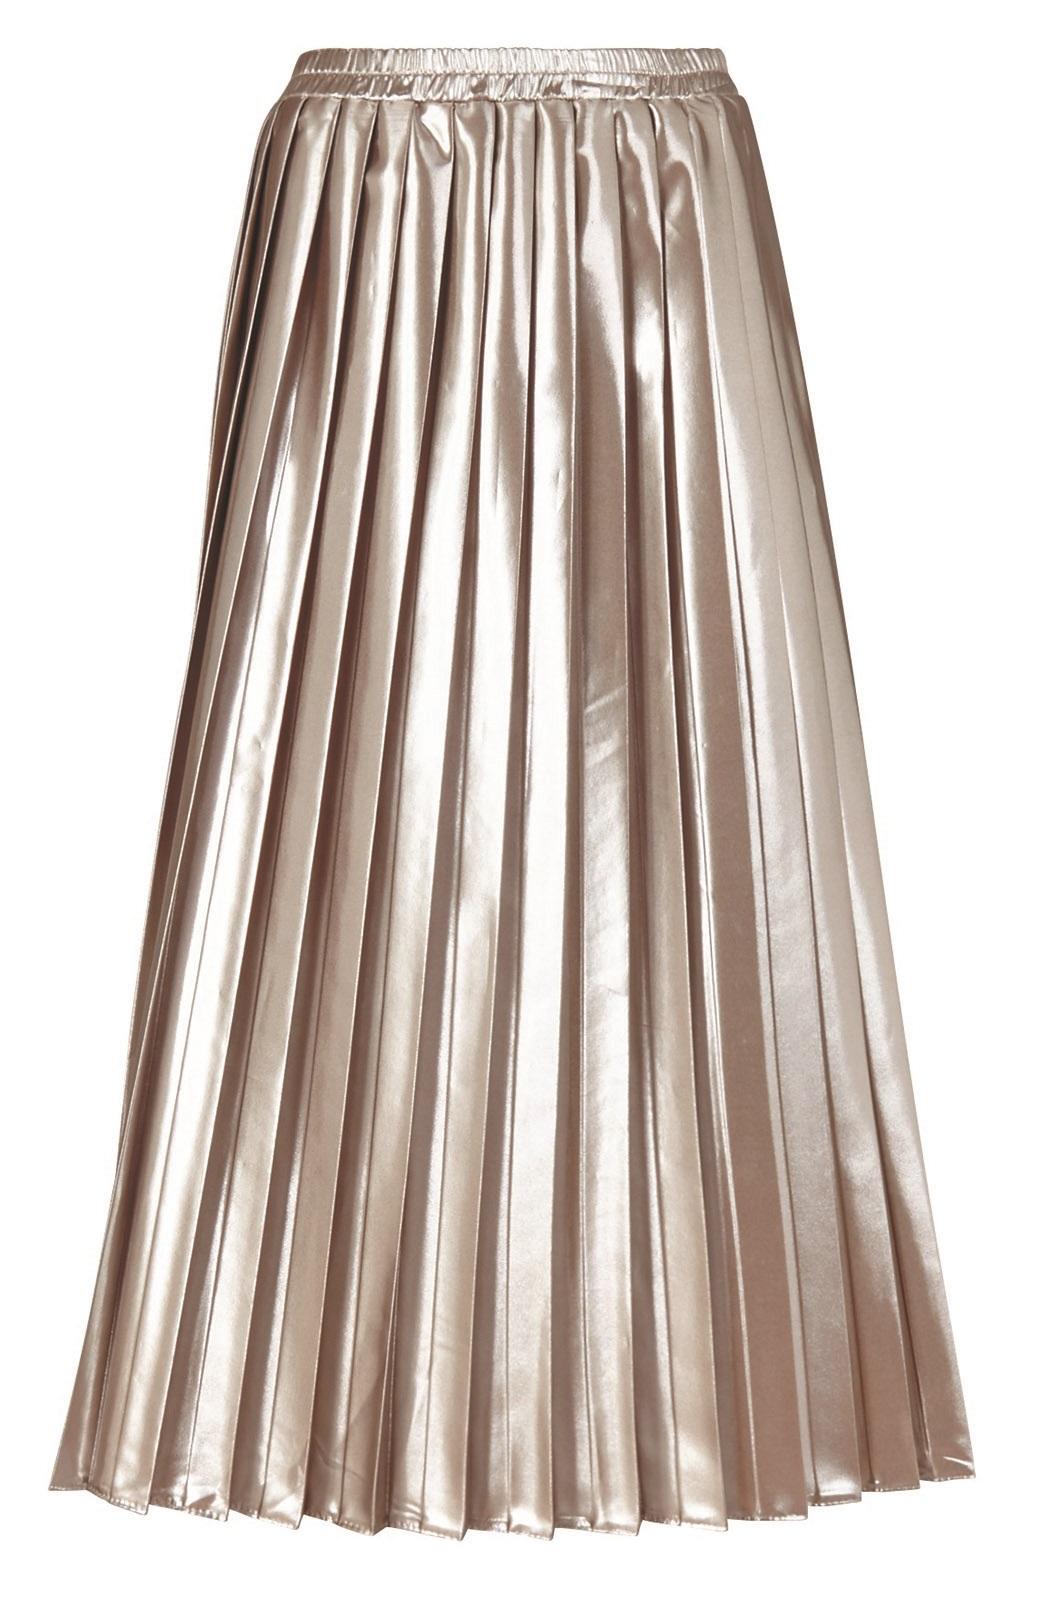 Littlewoods, Metallic Pleated Skirt, £45